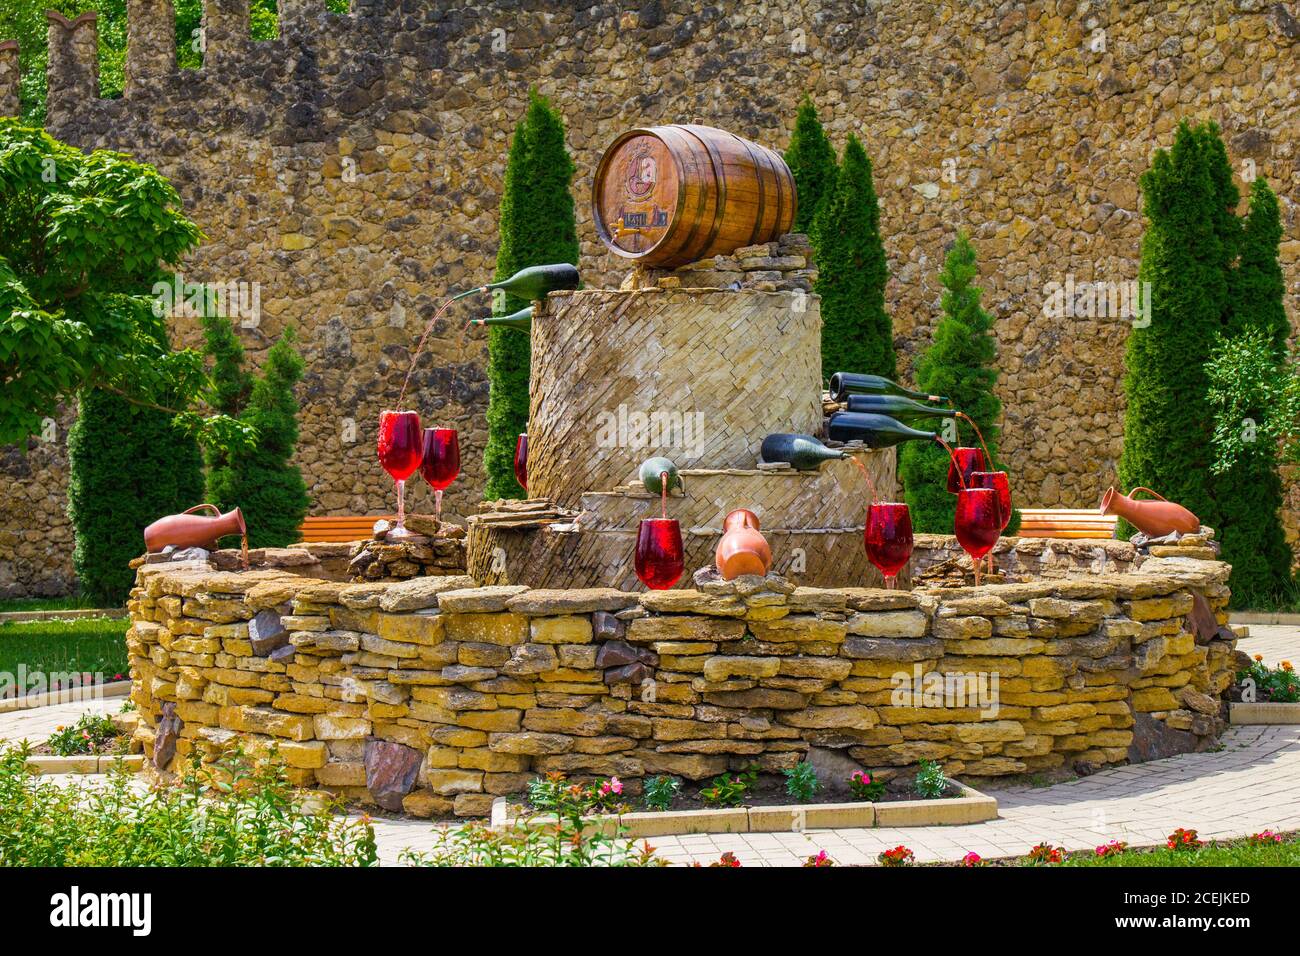 File:Mileștii Mici Wine Fountain.jpg - Wikimedia Commons